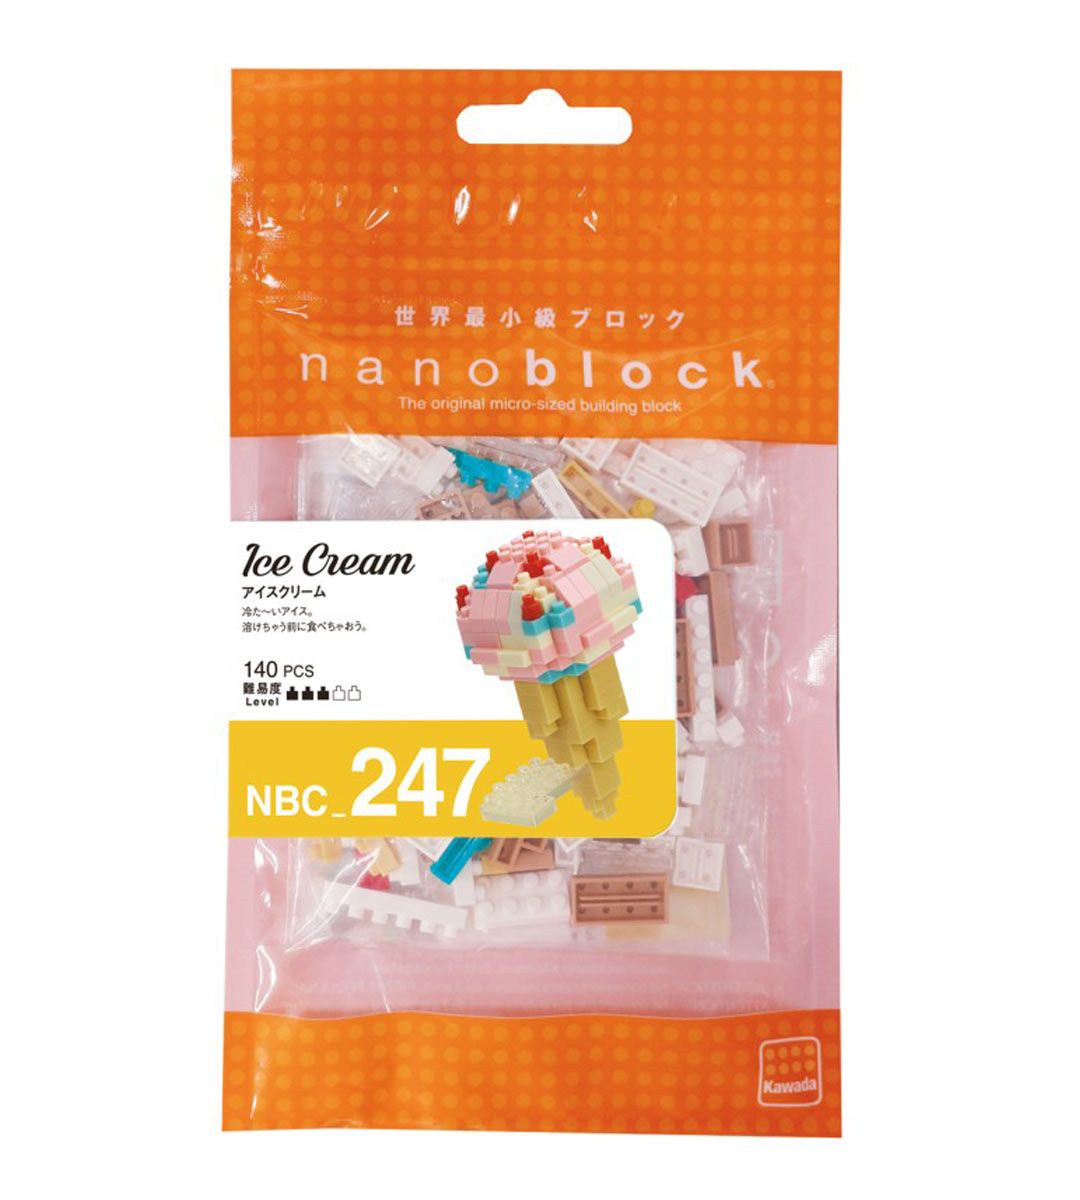 Nanoblock - Ice Cream